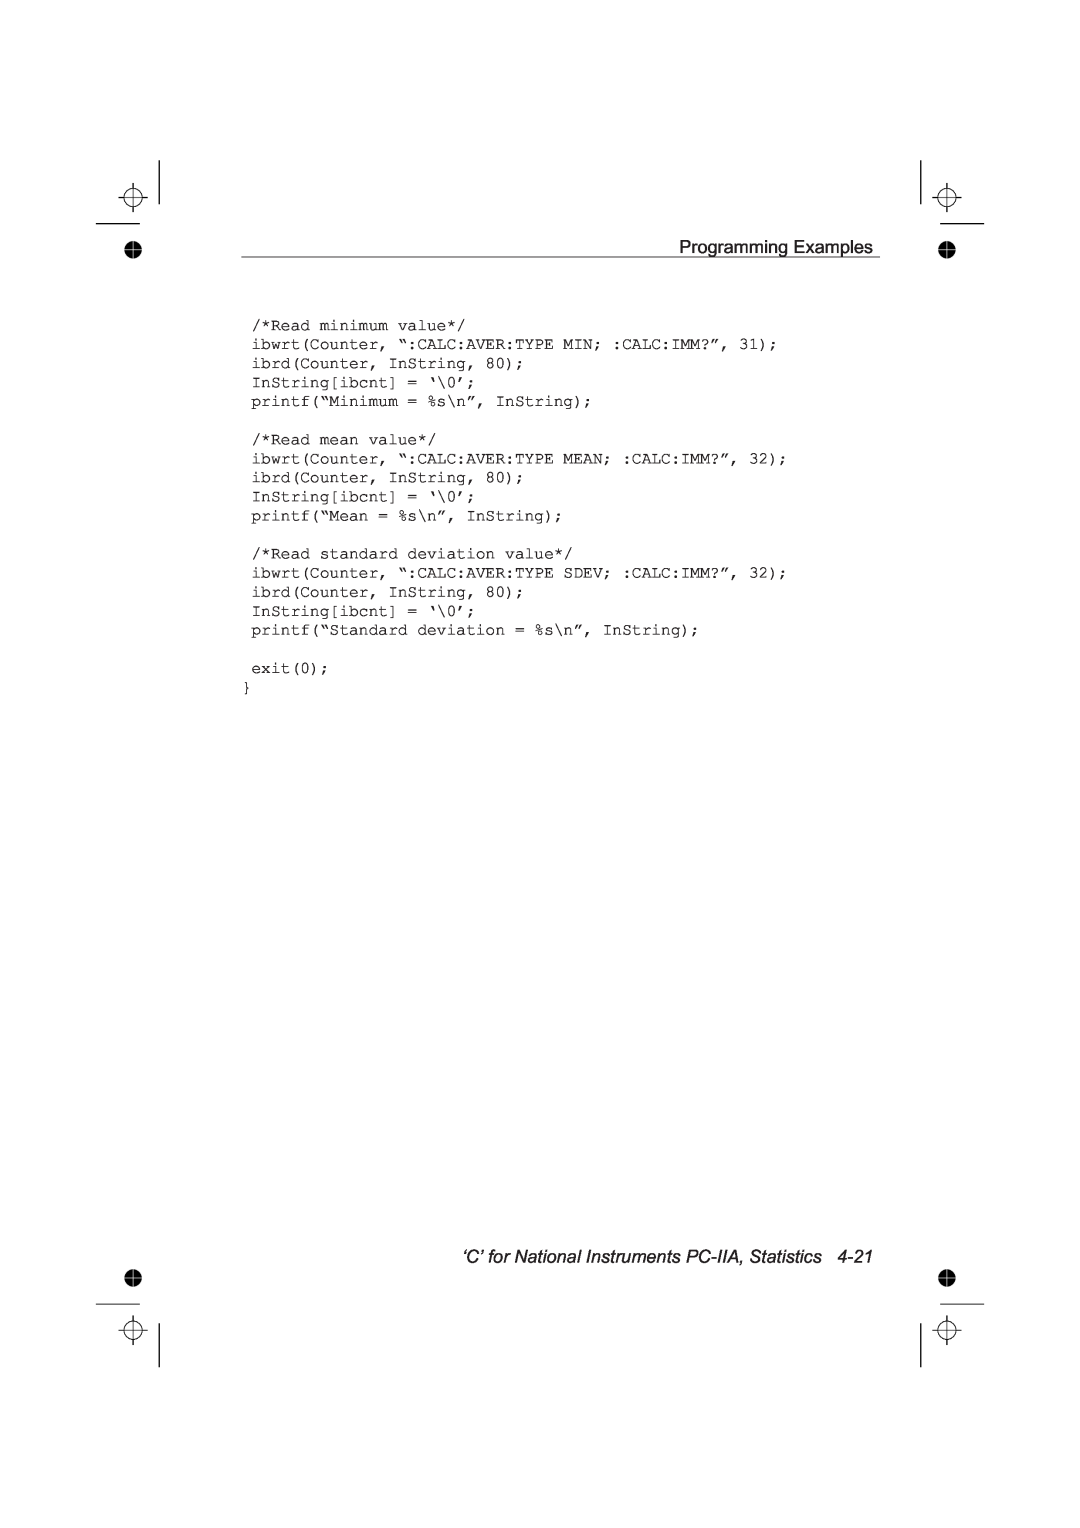 Fluke PM6681R, PM6685R manual ‘C’ for National Instruments PC-IIA, Statistics 